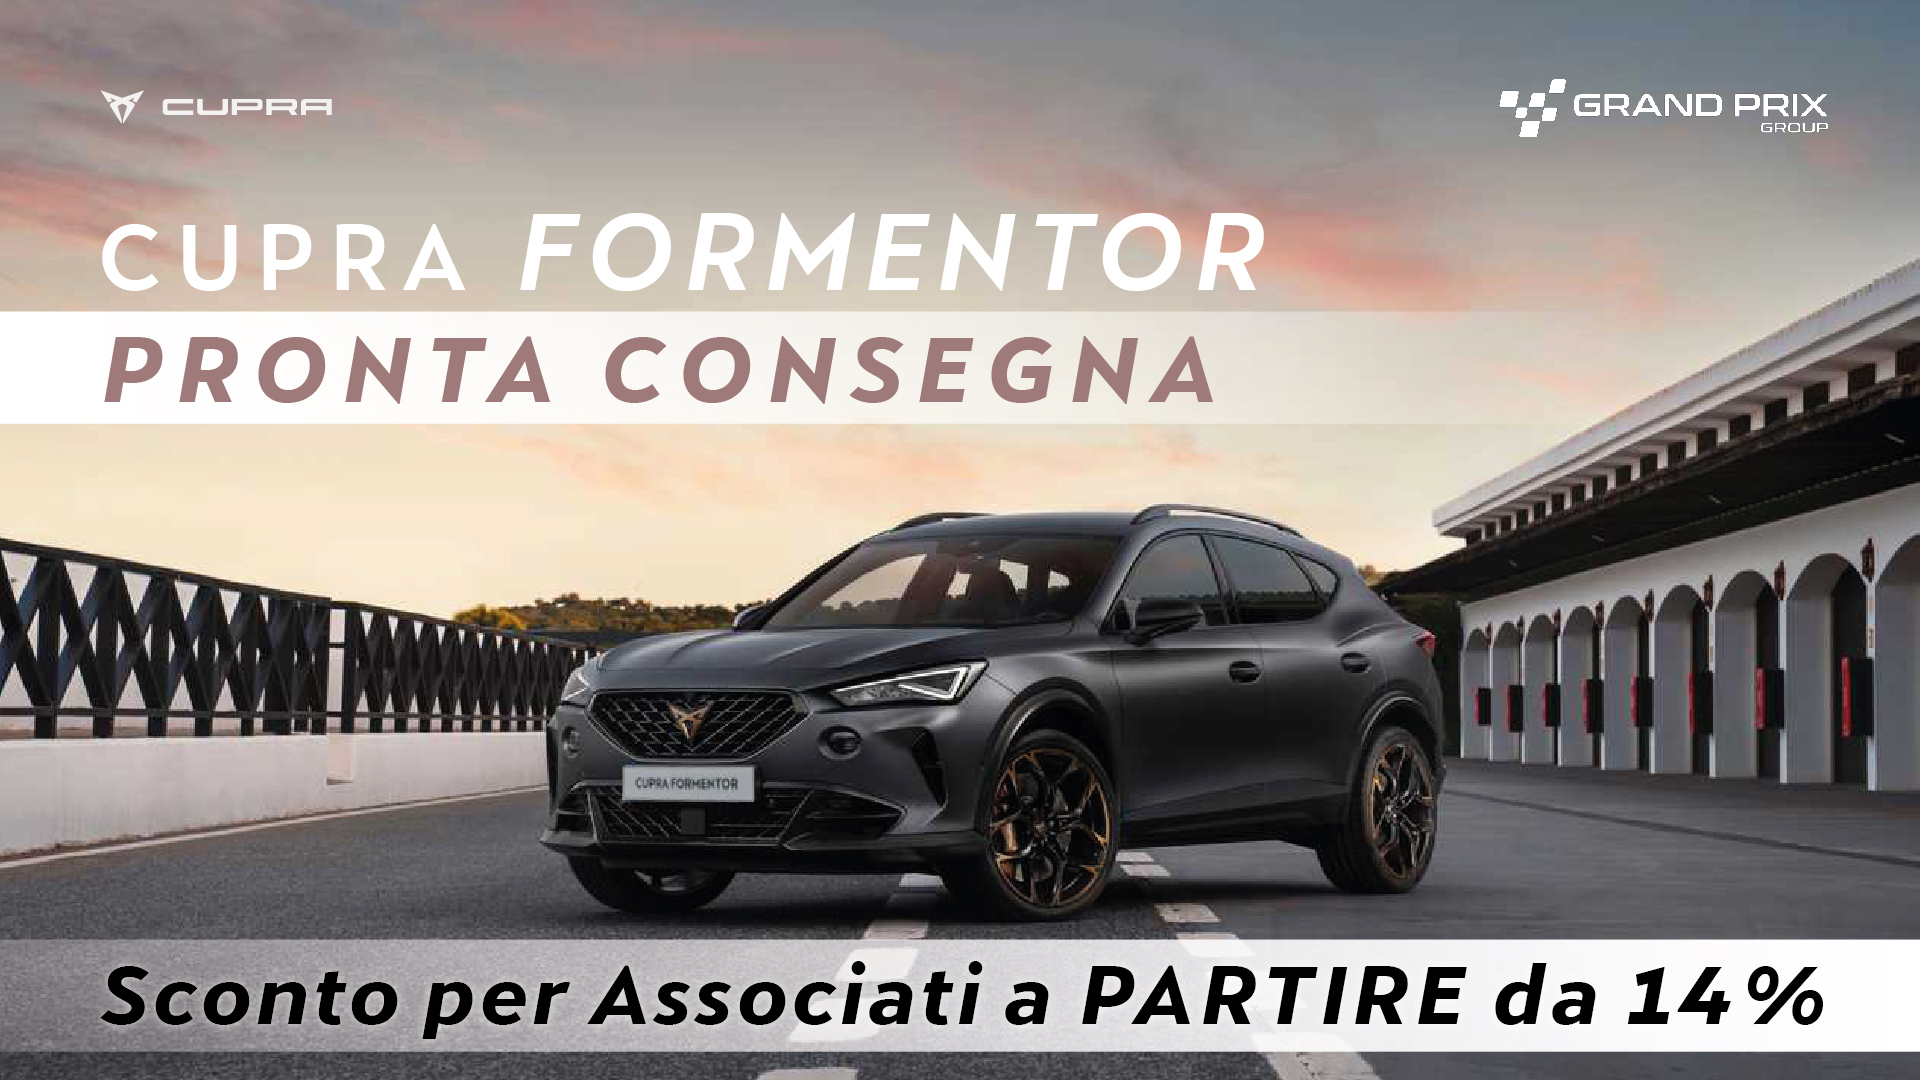 Grand Prix Group - Cupra Formentor in pronta consegna